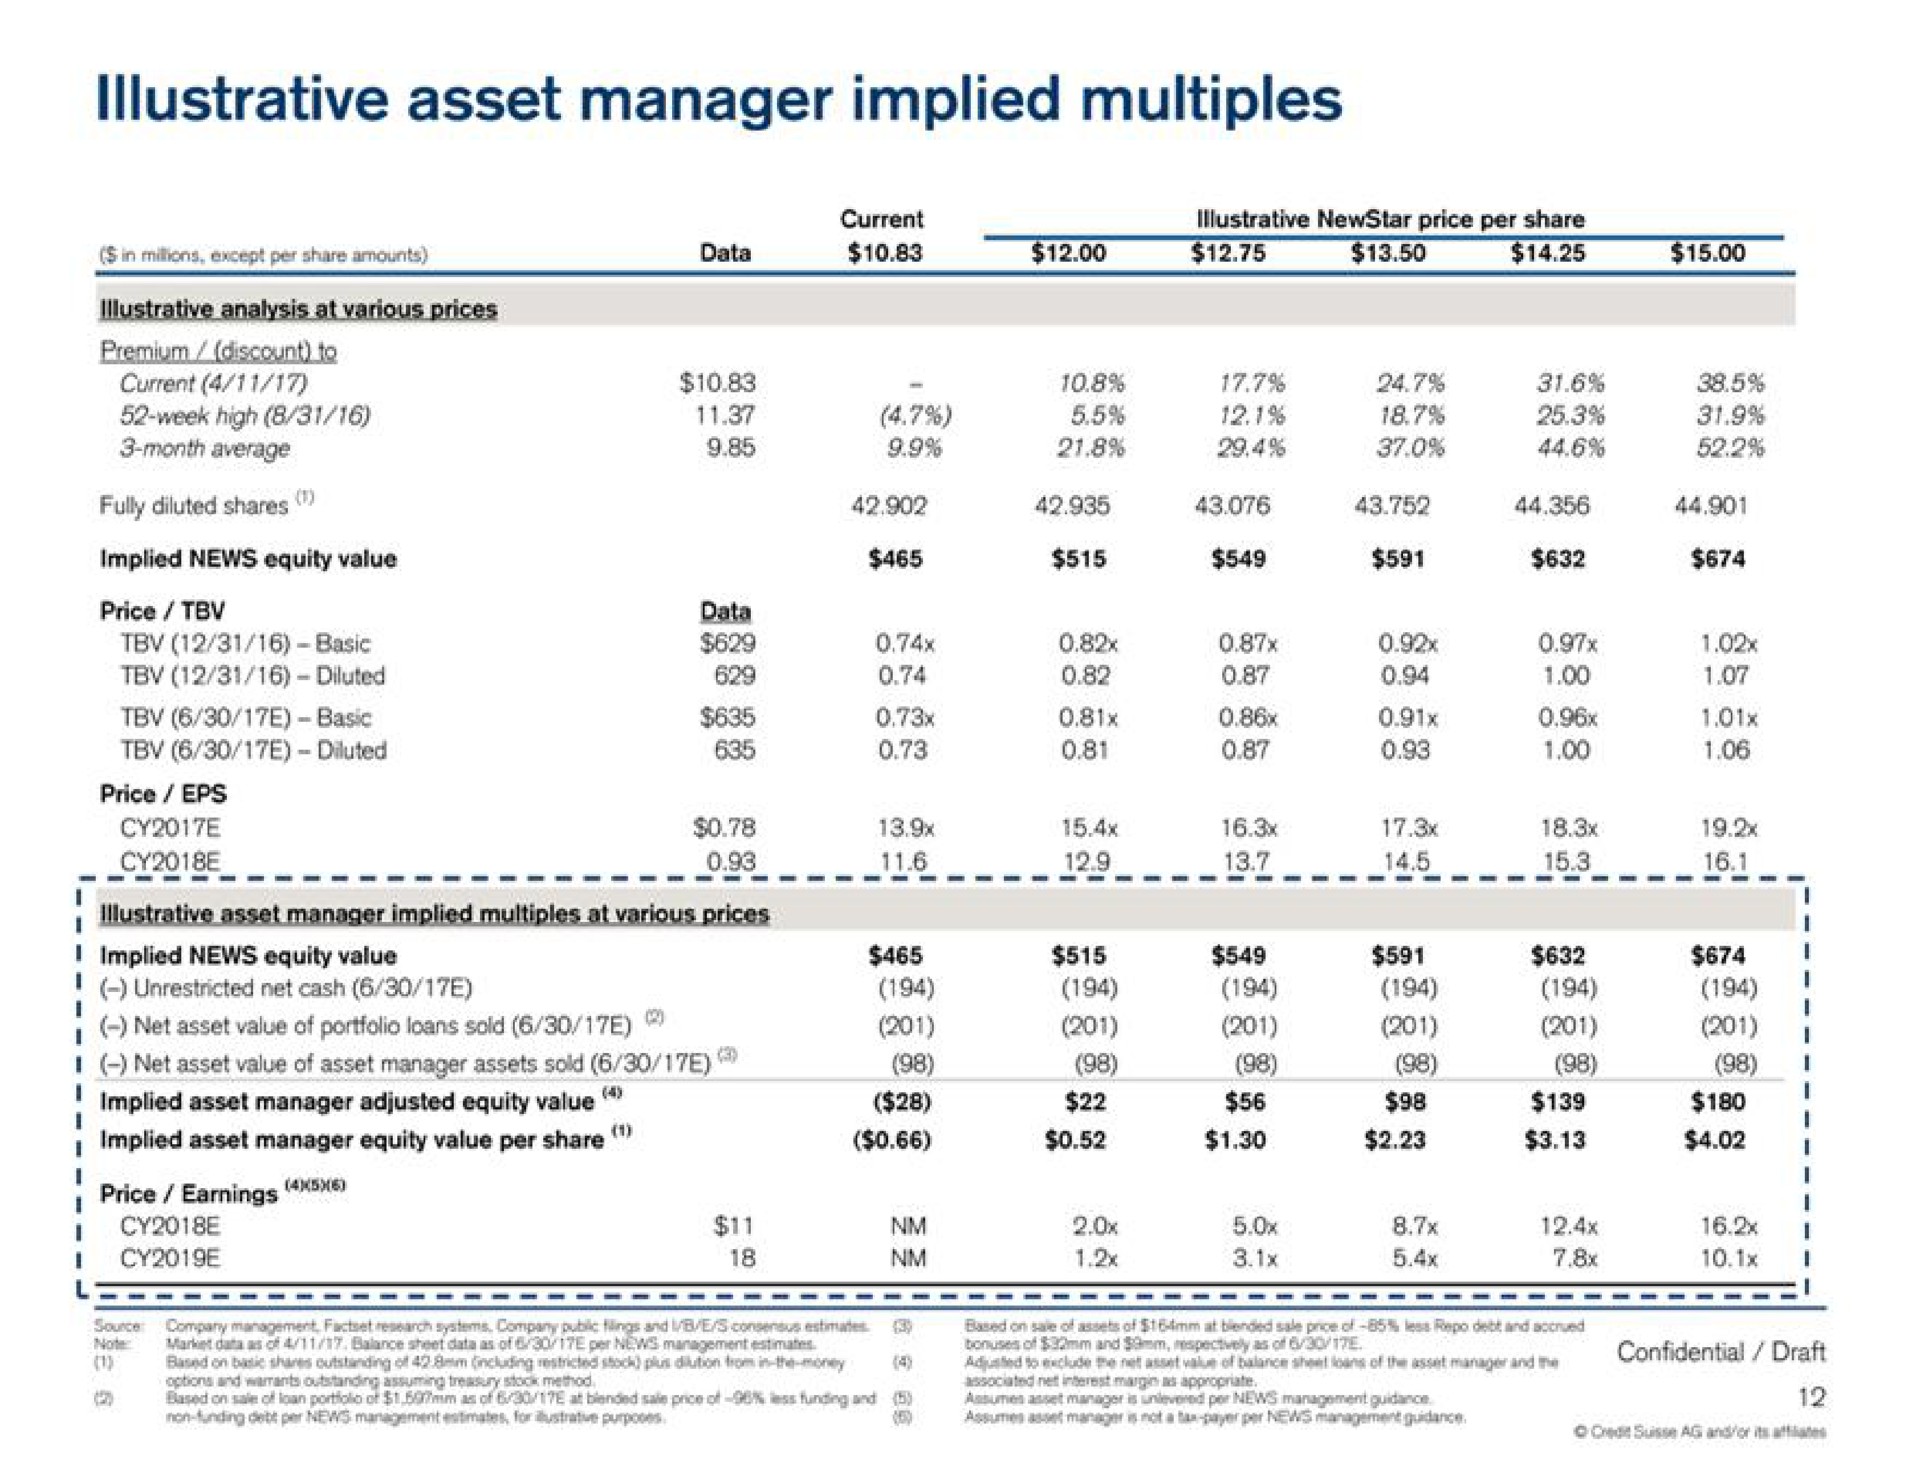 illustrative asset manager implied multiples net asset value of portfolio loans sold implied asset manager adjusted equity value price earnings | Credit Suisse